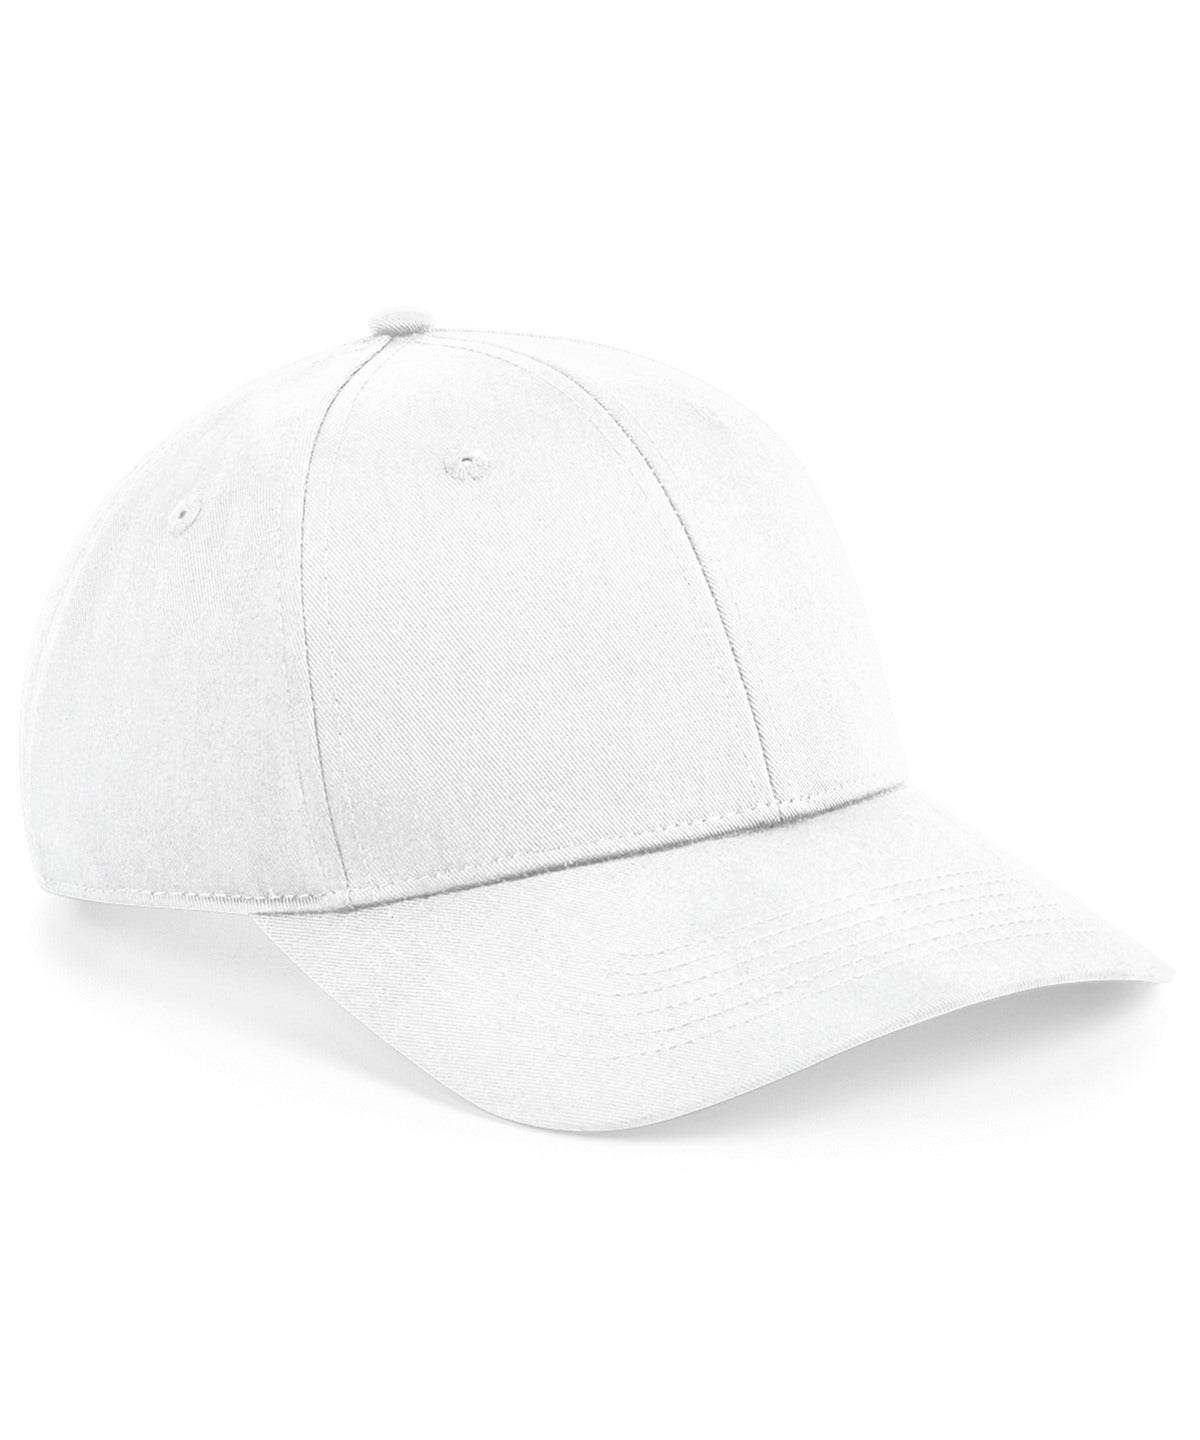 Personalised Caps - White Beechfield Urbanwear 6-panel snapback